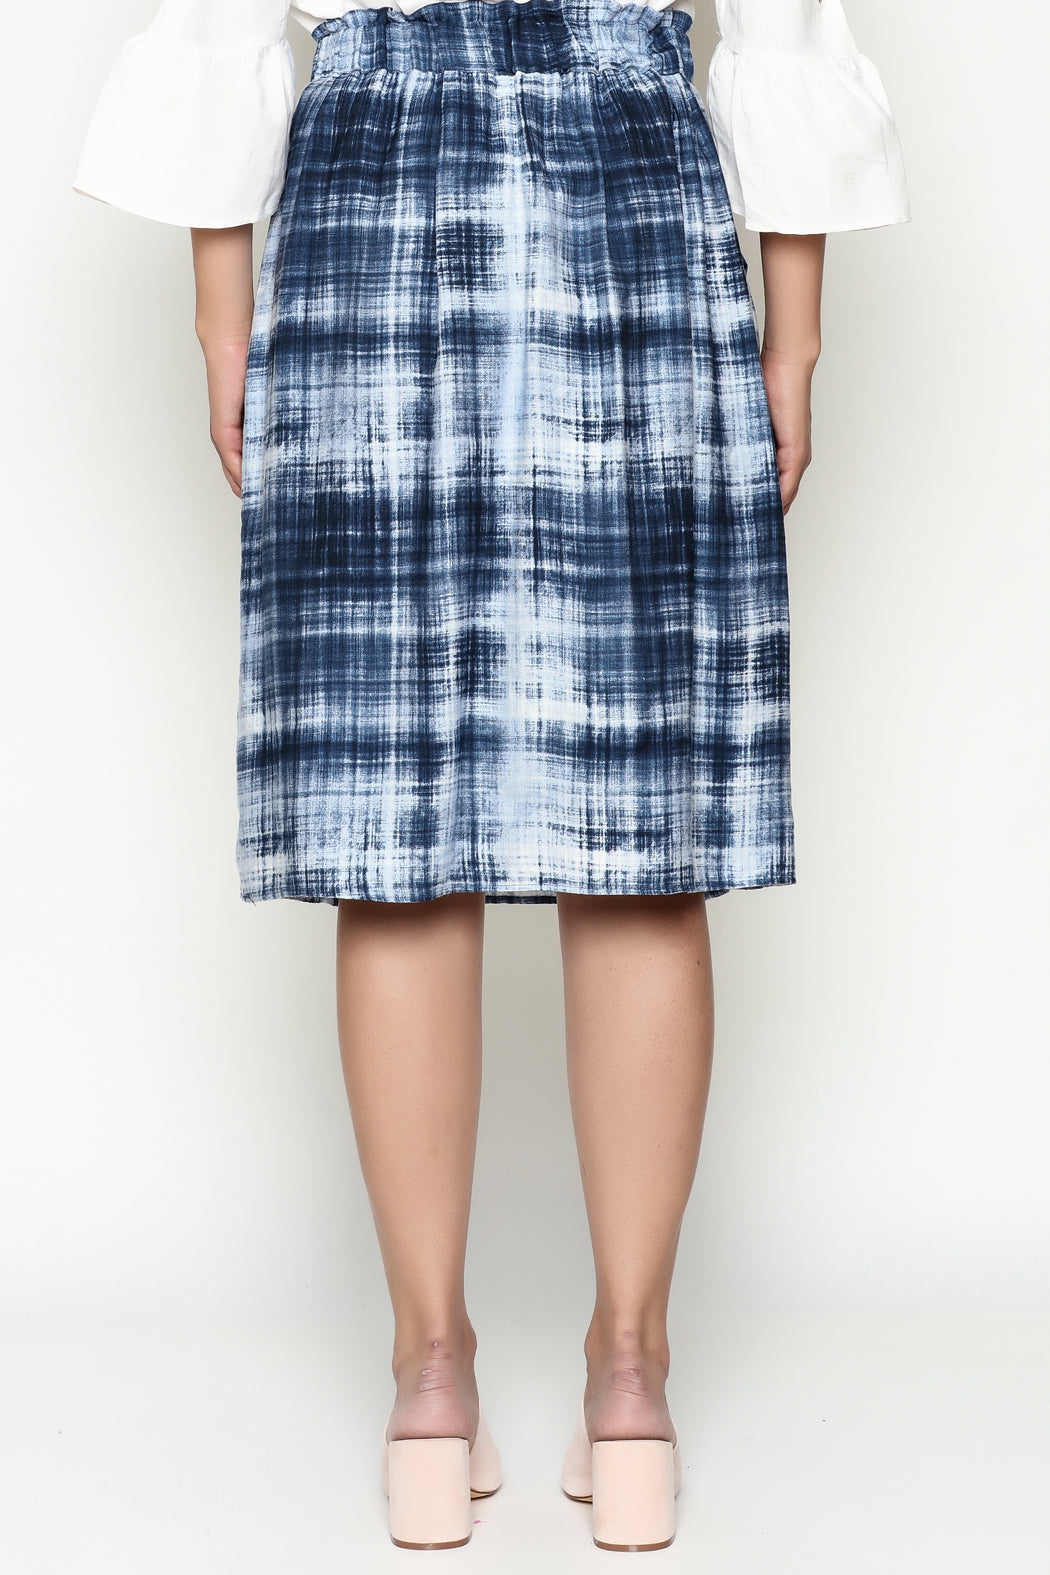 midi skirt, printed skirt